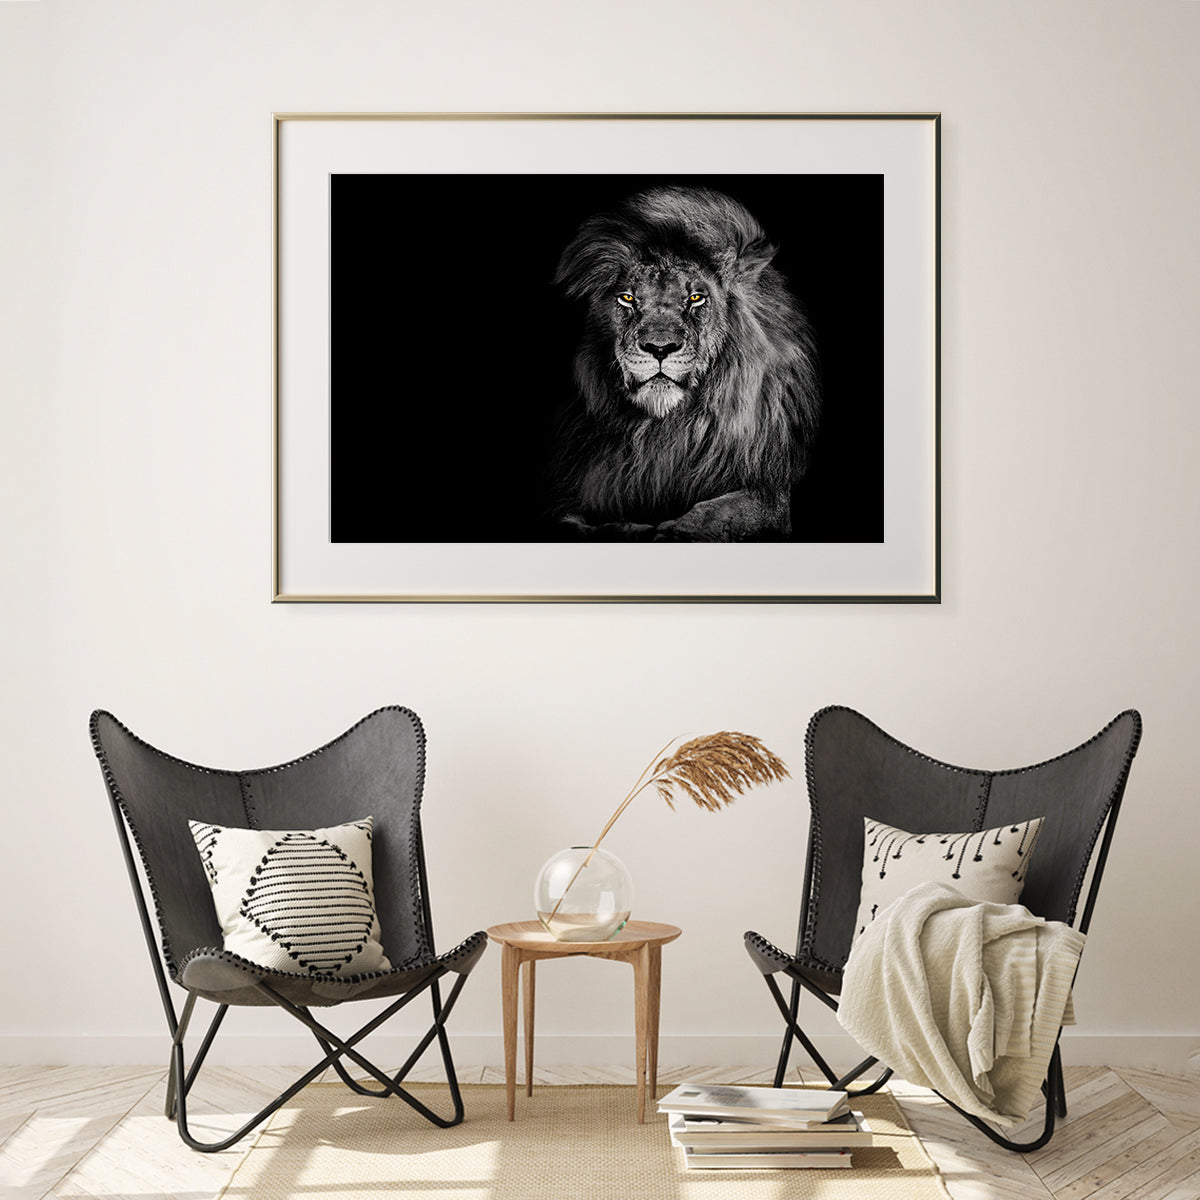 Lion King Portrait Black Poster Art Wall Decor-Horizontal Posters NOT FRAMED-CetArt-10″x8″ inches-CetArt